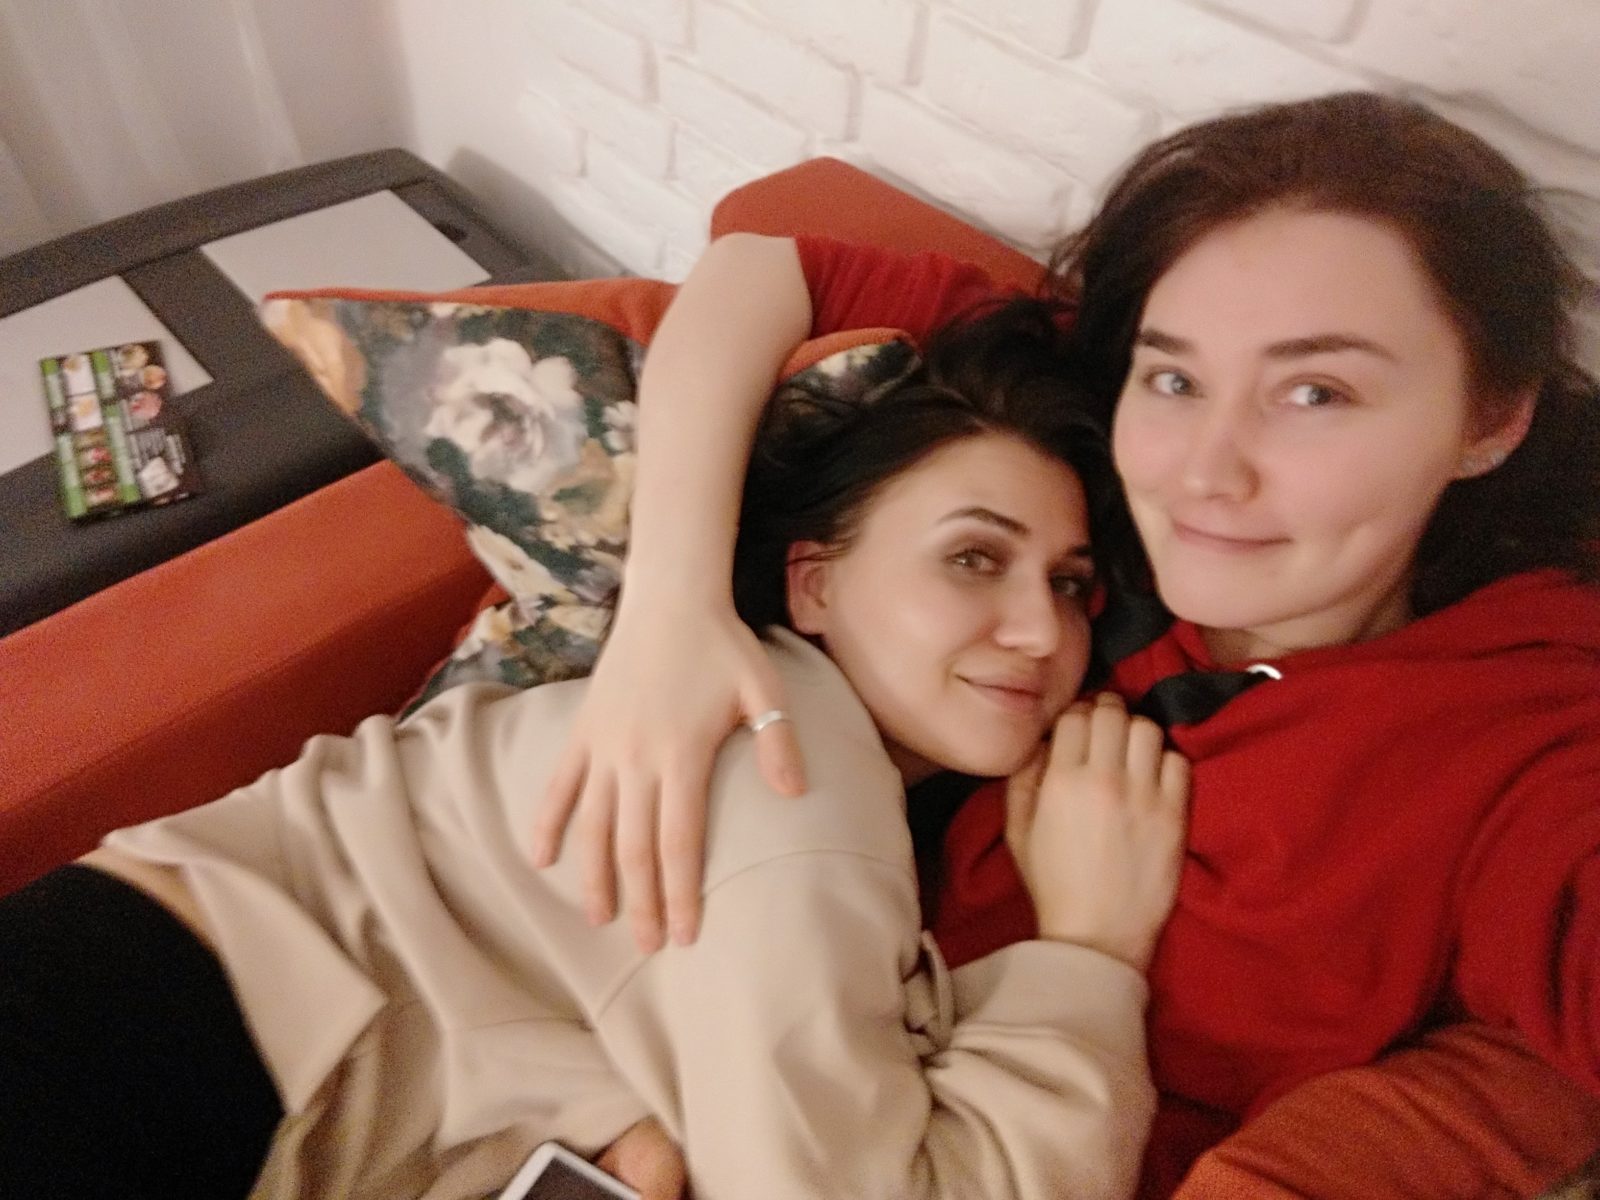 russian school girl lesbian naked video pics